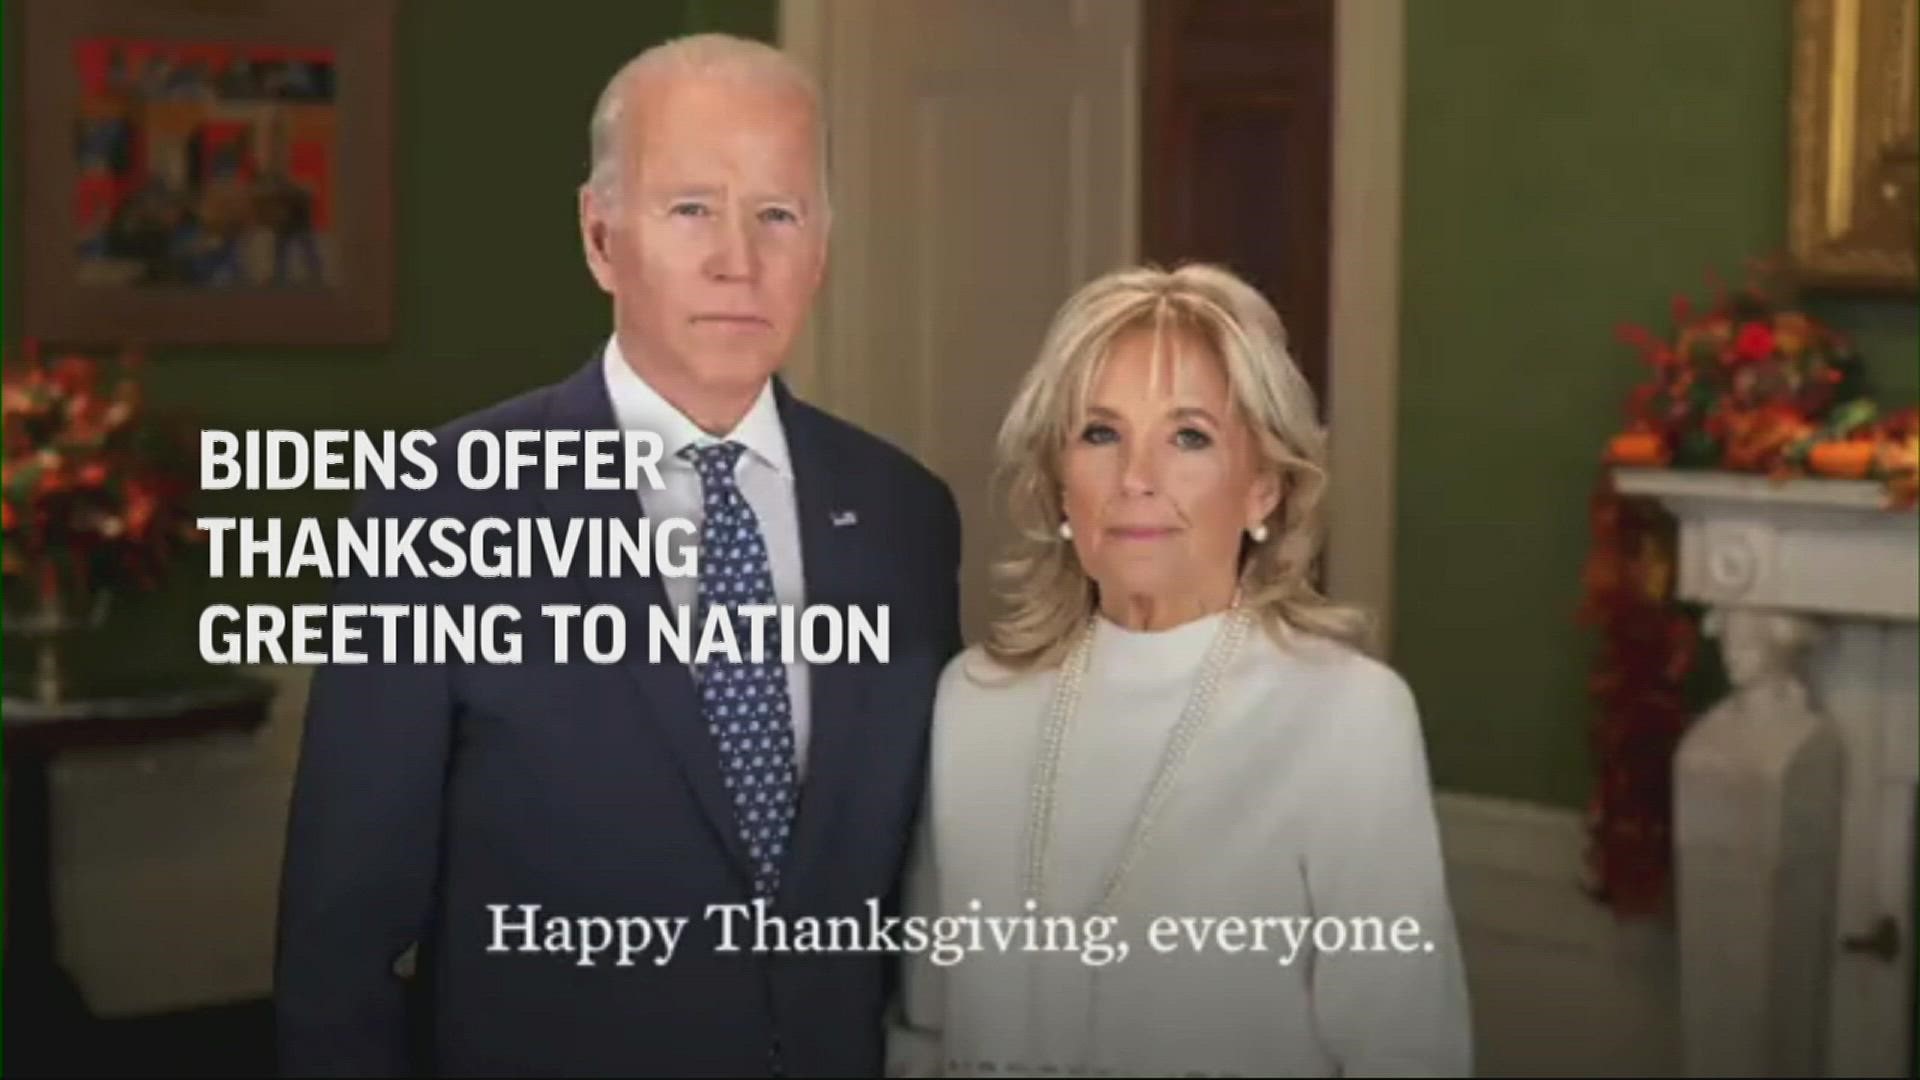 President Joe Biden and First Lady Dr. Jill Biden sent Thanksgiving greetings to the nation on Thursday.